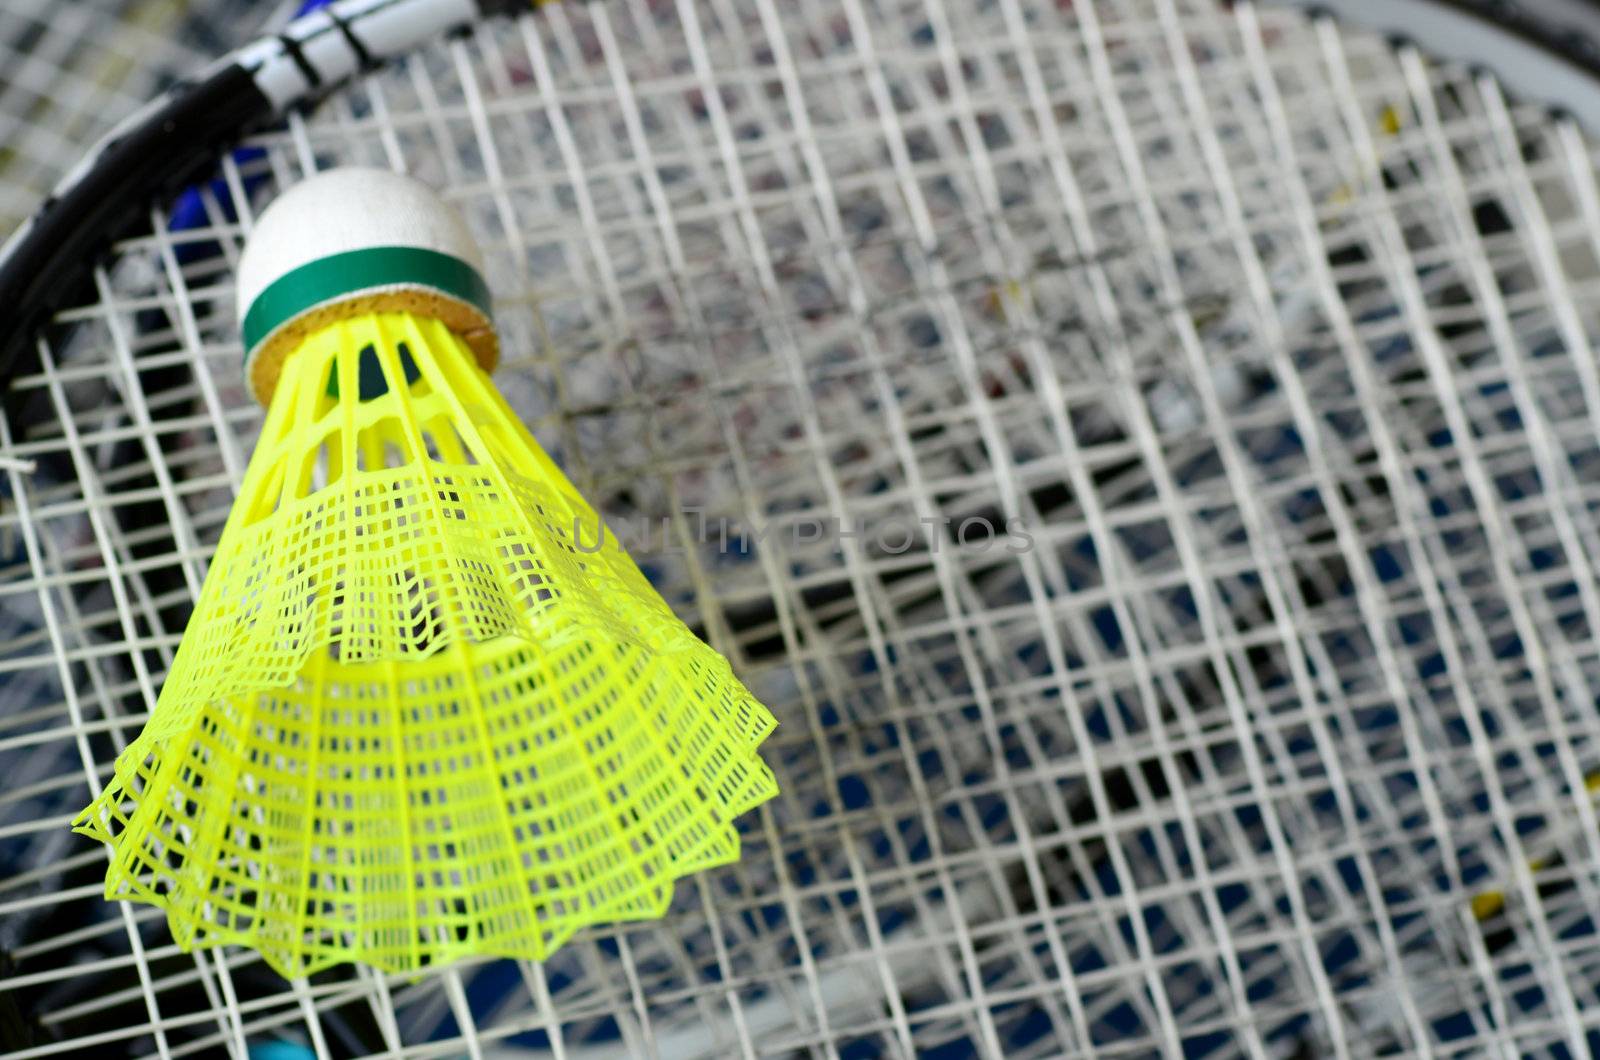 badminton by antpkr